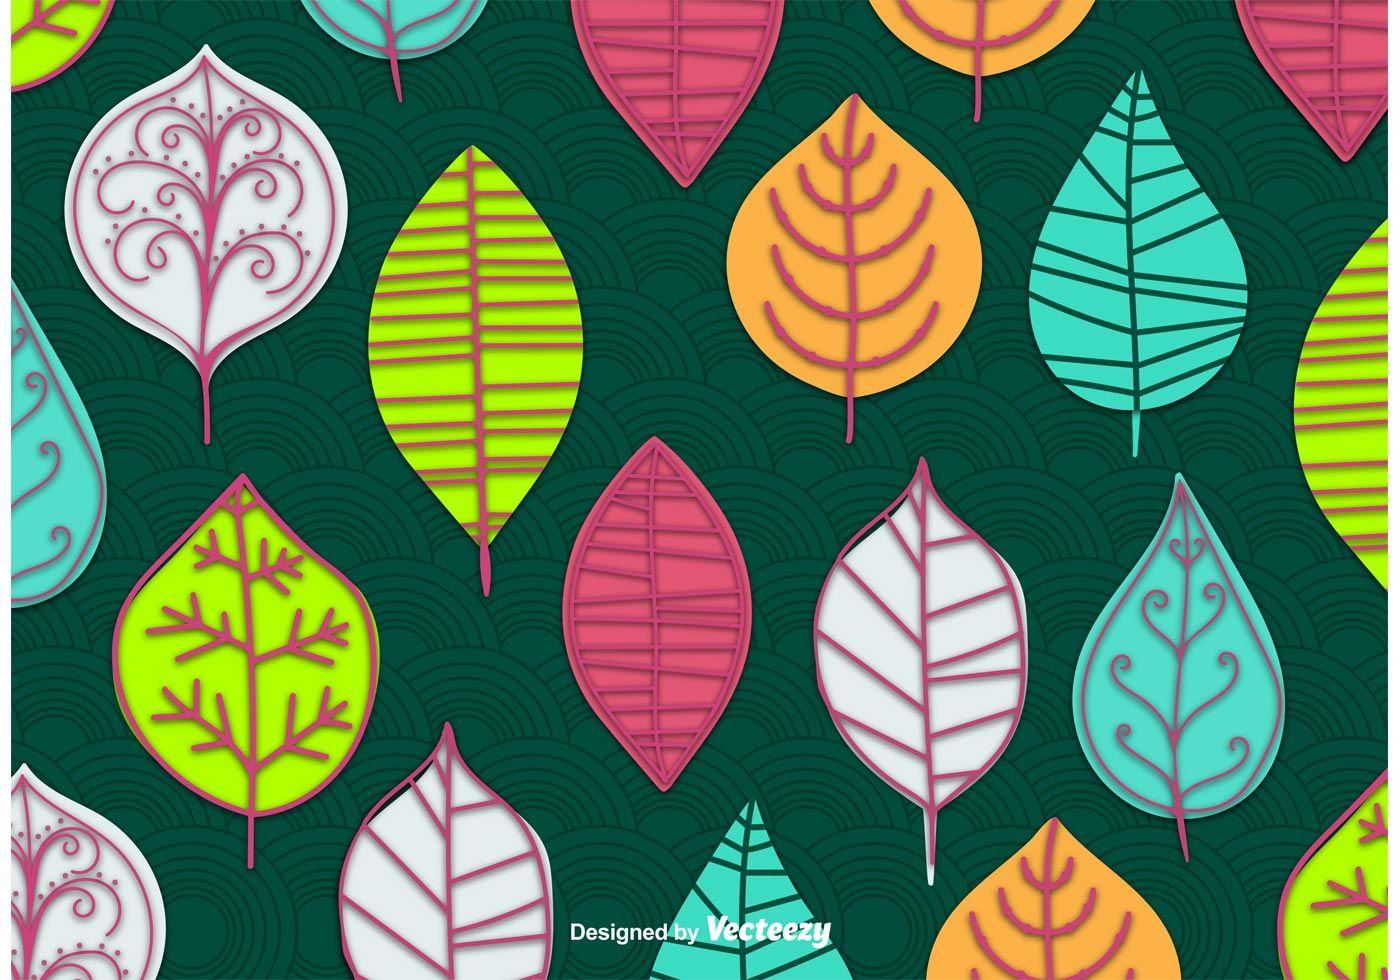 Leaves Wallpaper Free Vector Art - (22193 Free Downloads)